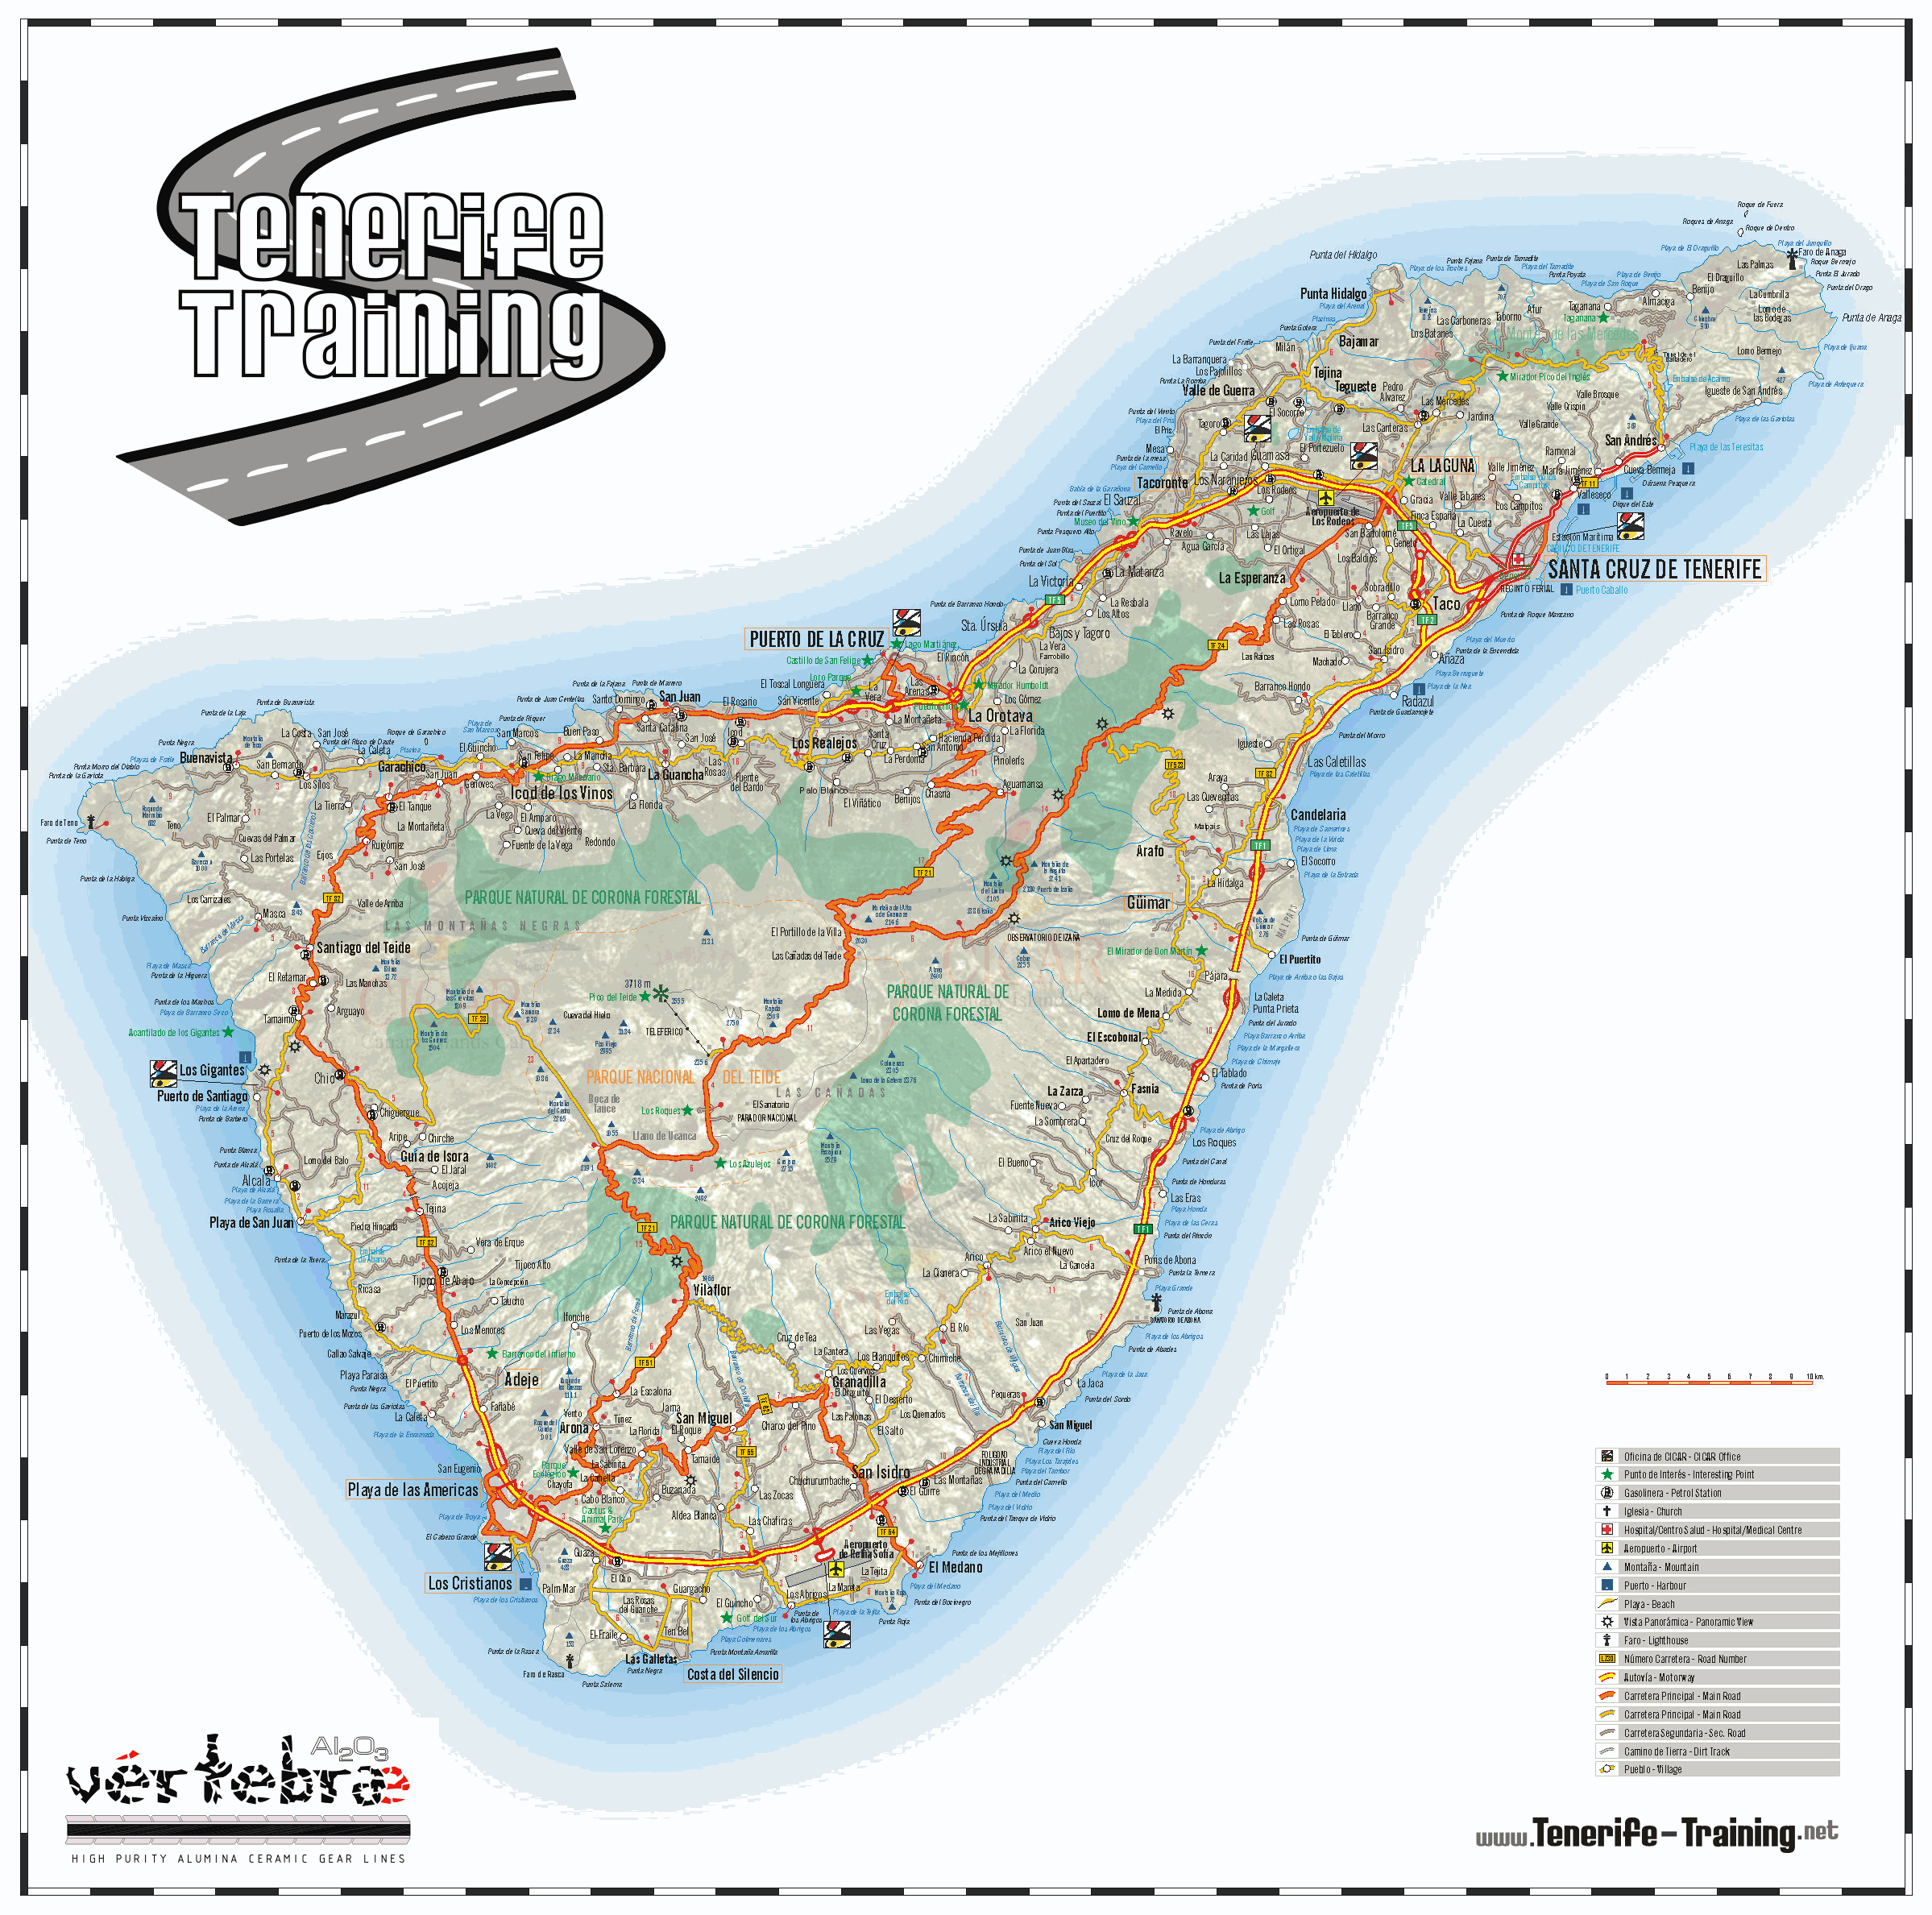 Puerto de la Cruz Hotel and Street Maps: